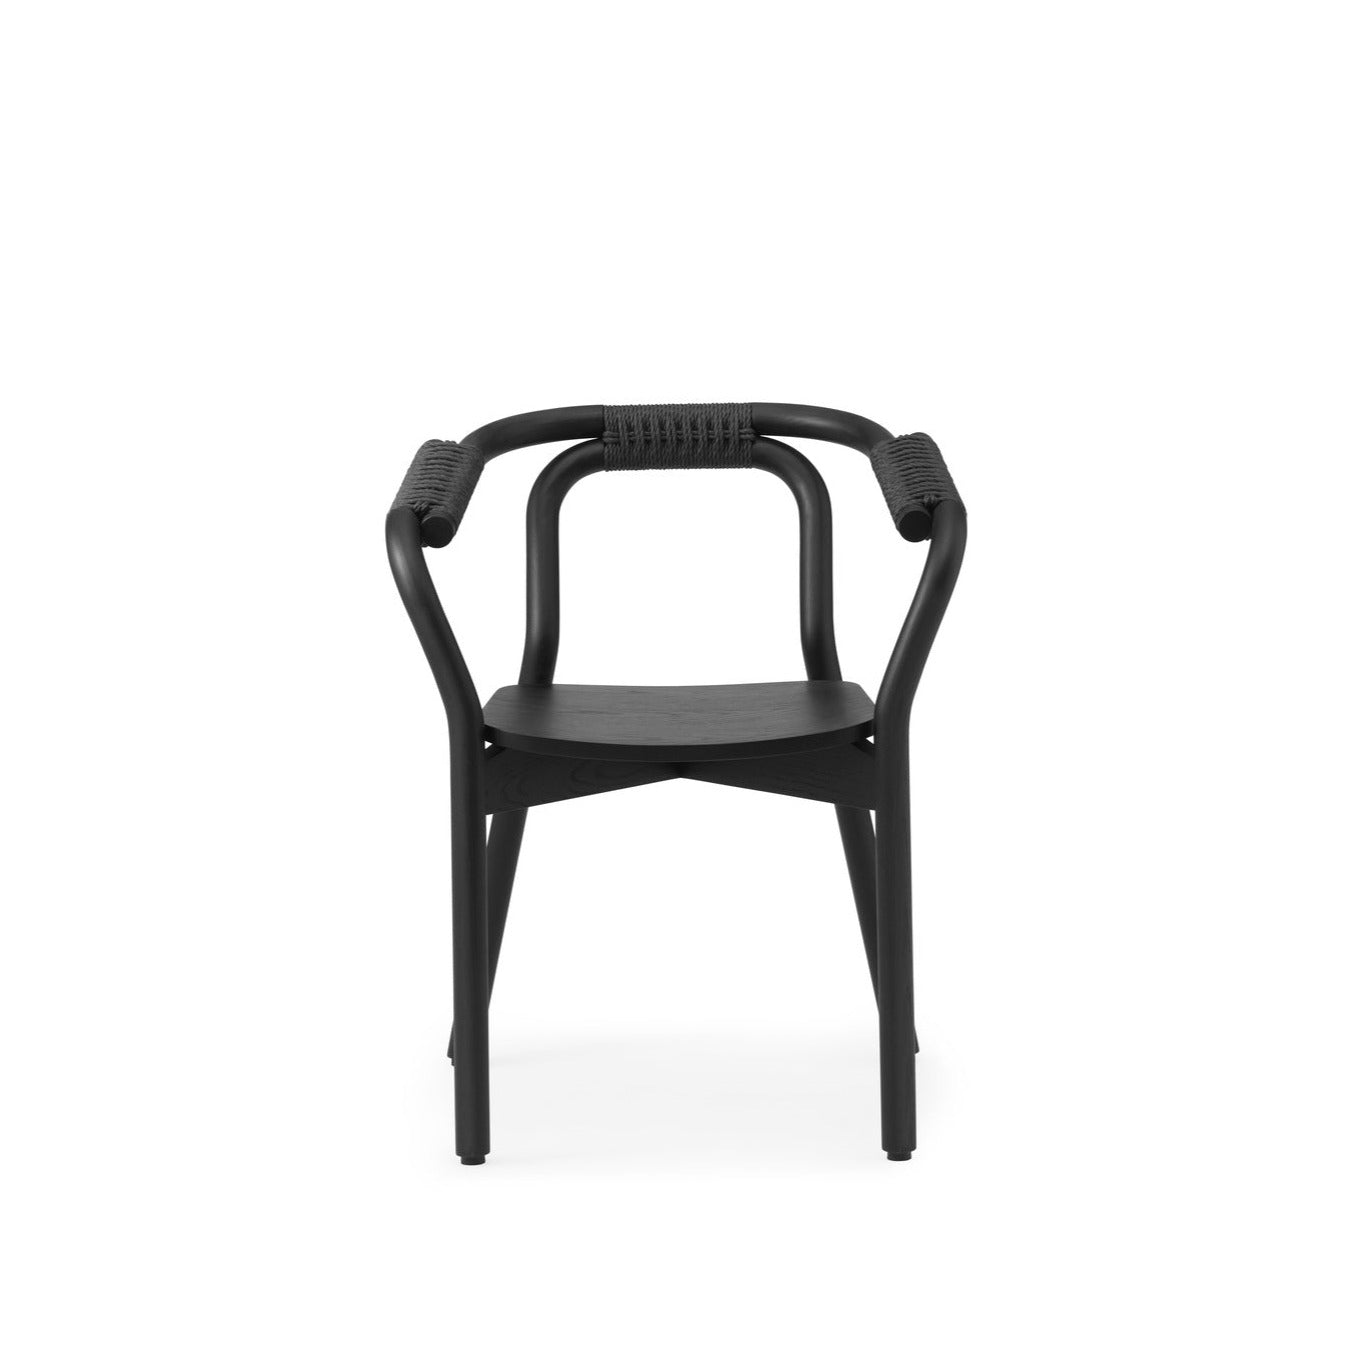 Normann Copenhagen Knot Chair at someday designs. #colour_black